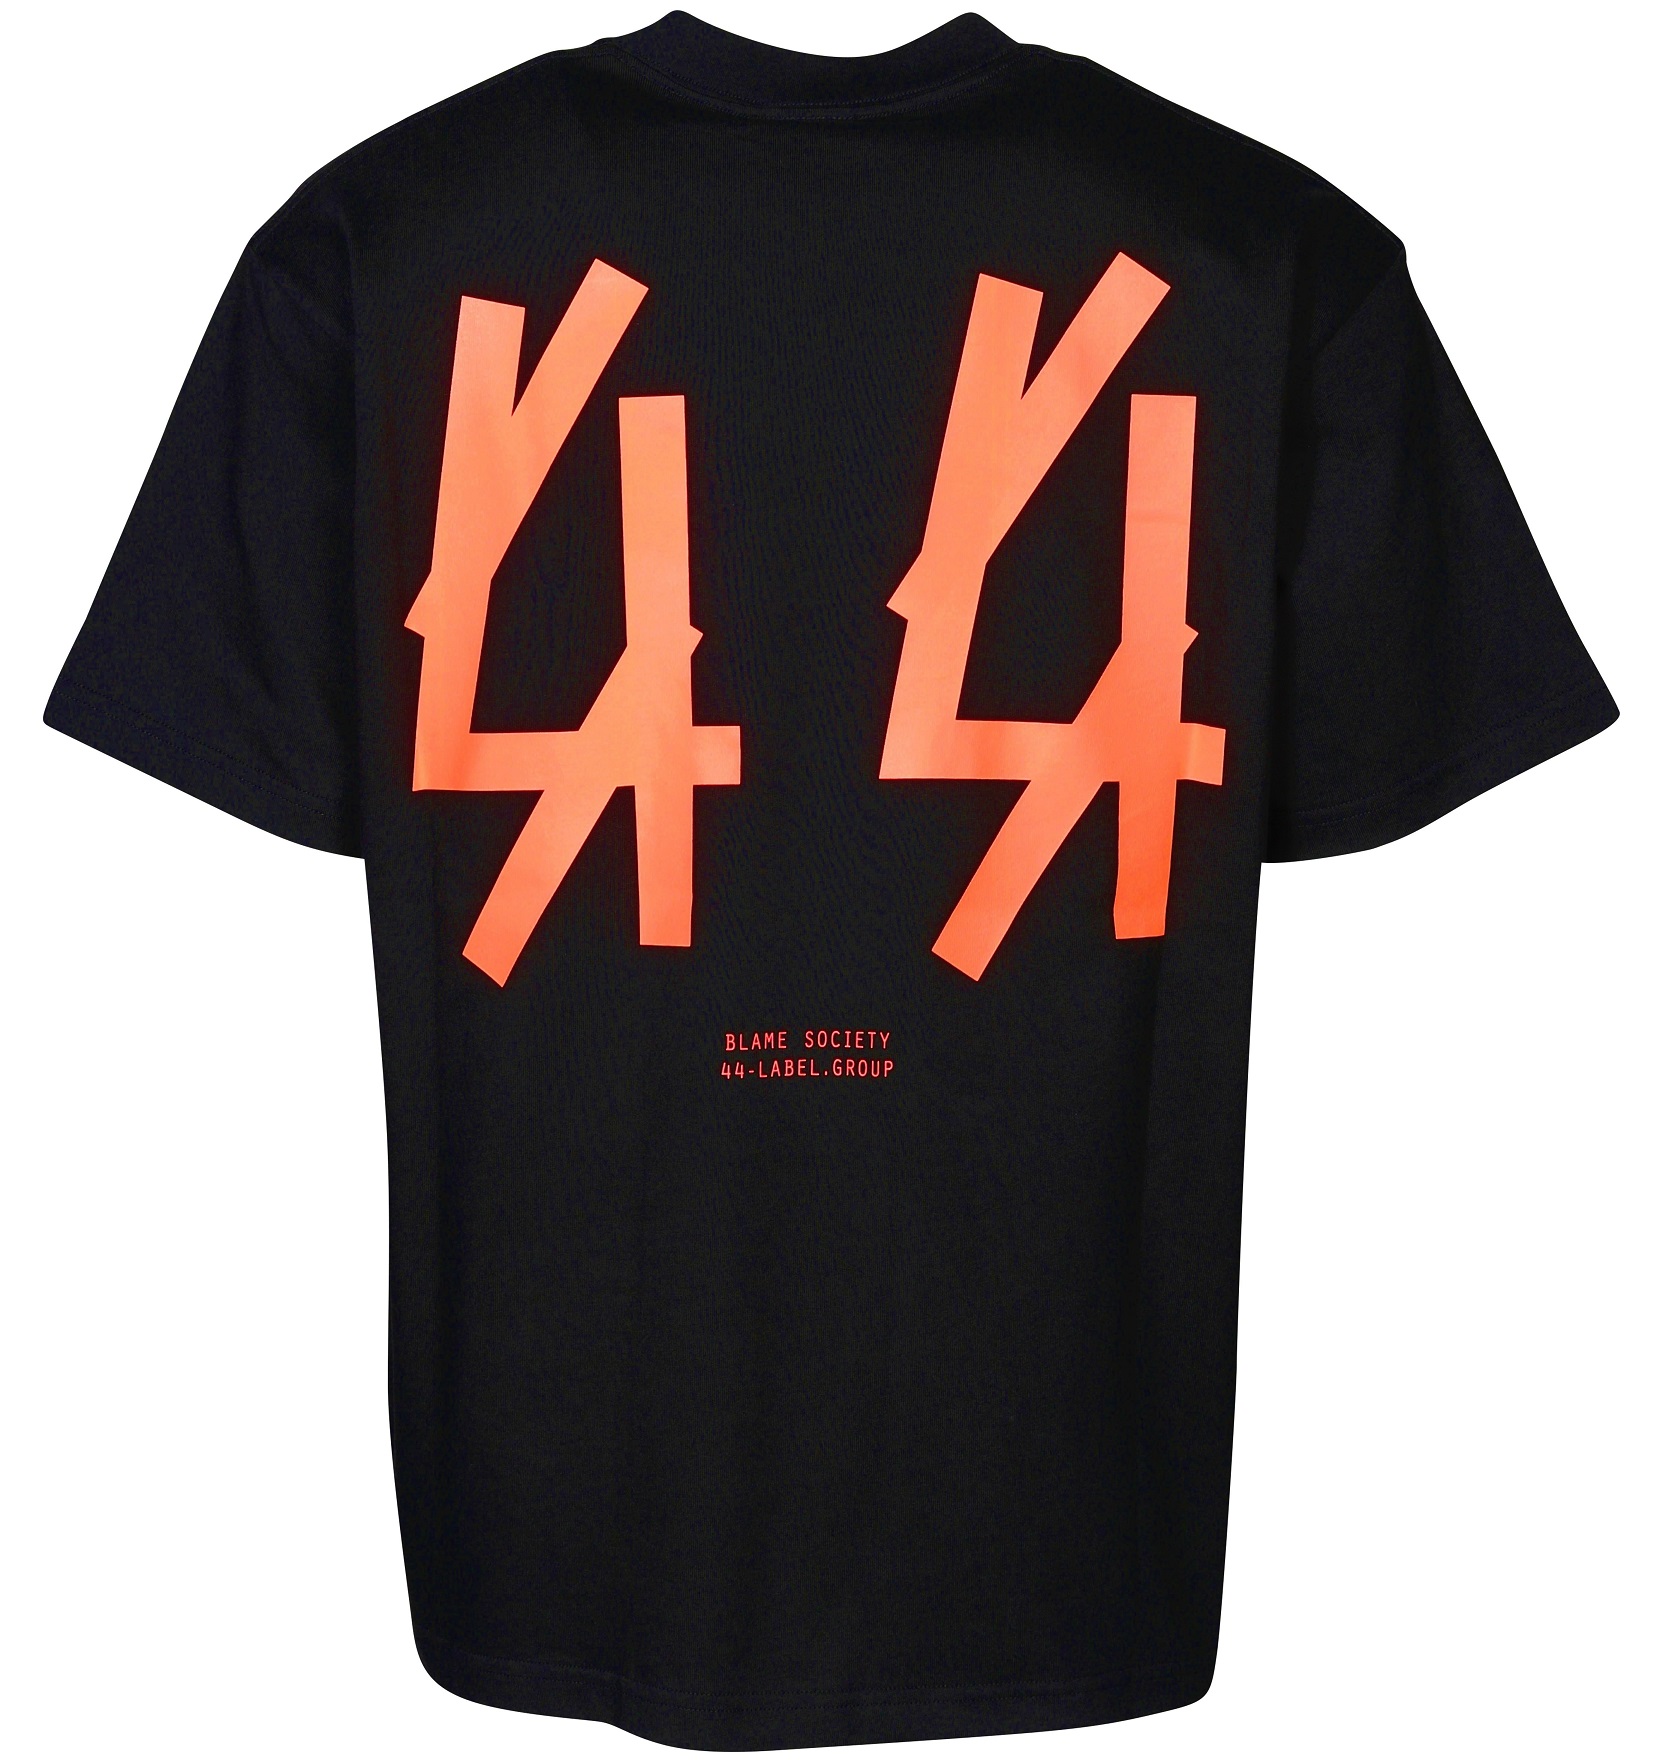 44 LABEL GROUP Original T-Shirt in Black/Neon Print